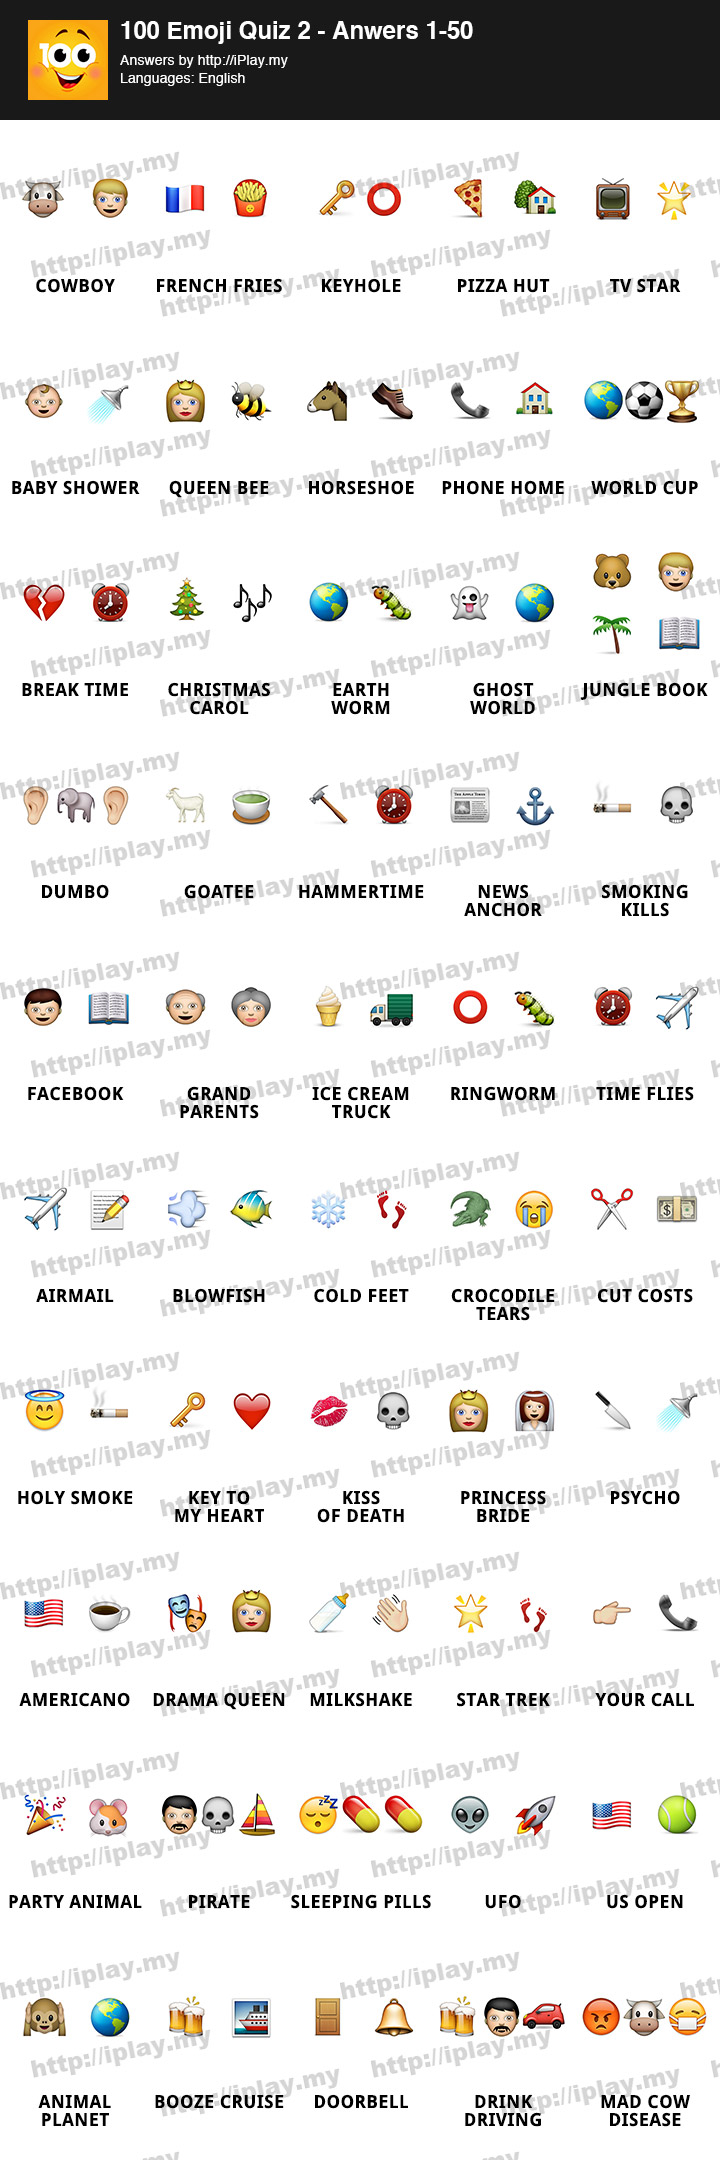 100 Emoji Quiz 2 Answers | iPlay.my